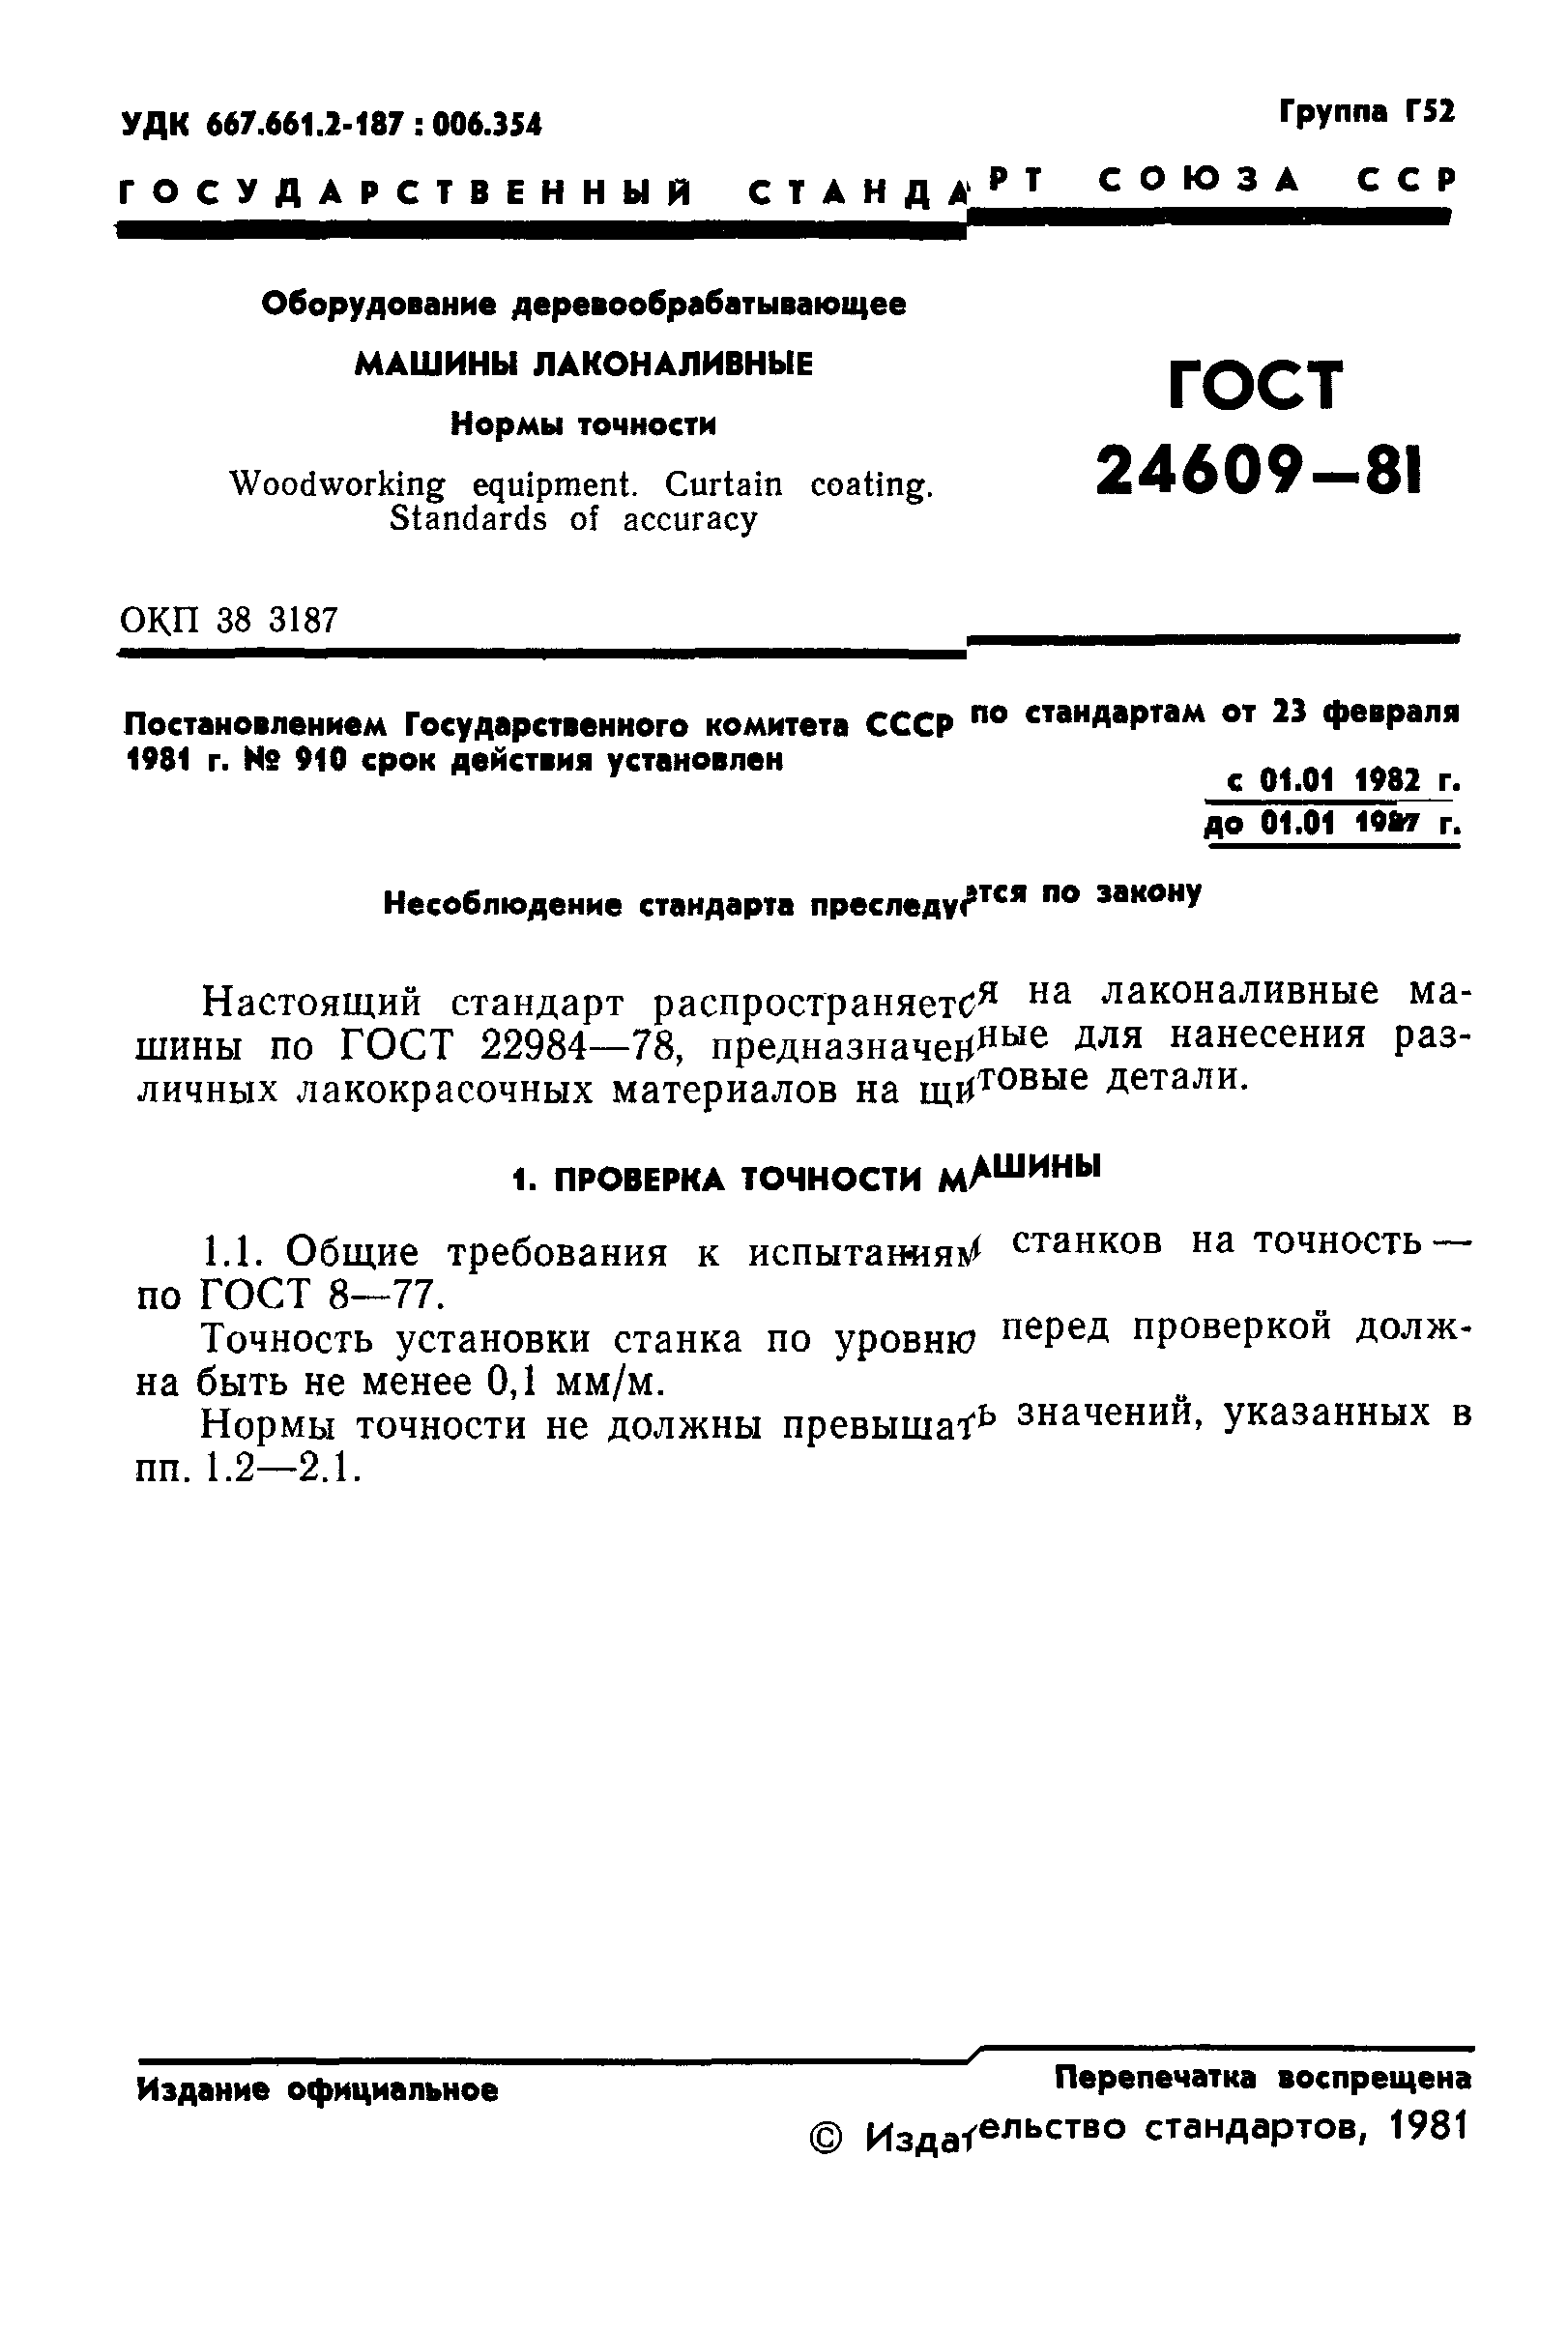 ГОСТ 24609-81